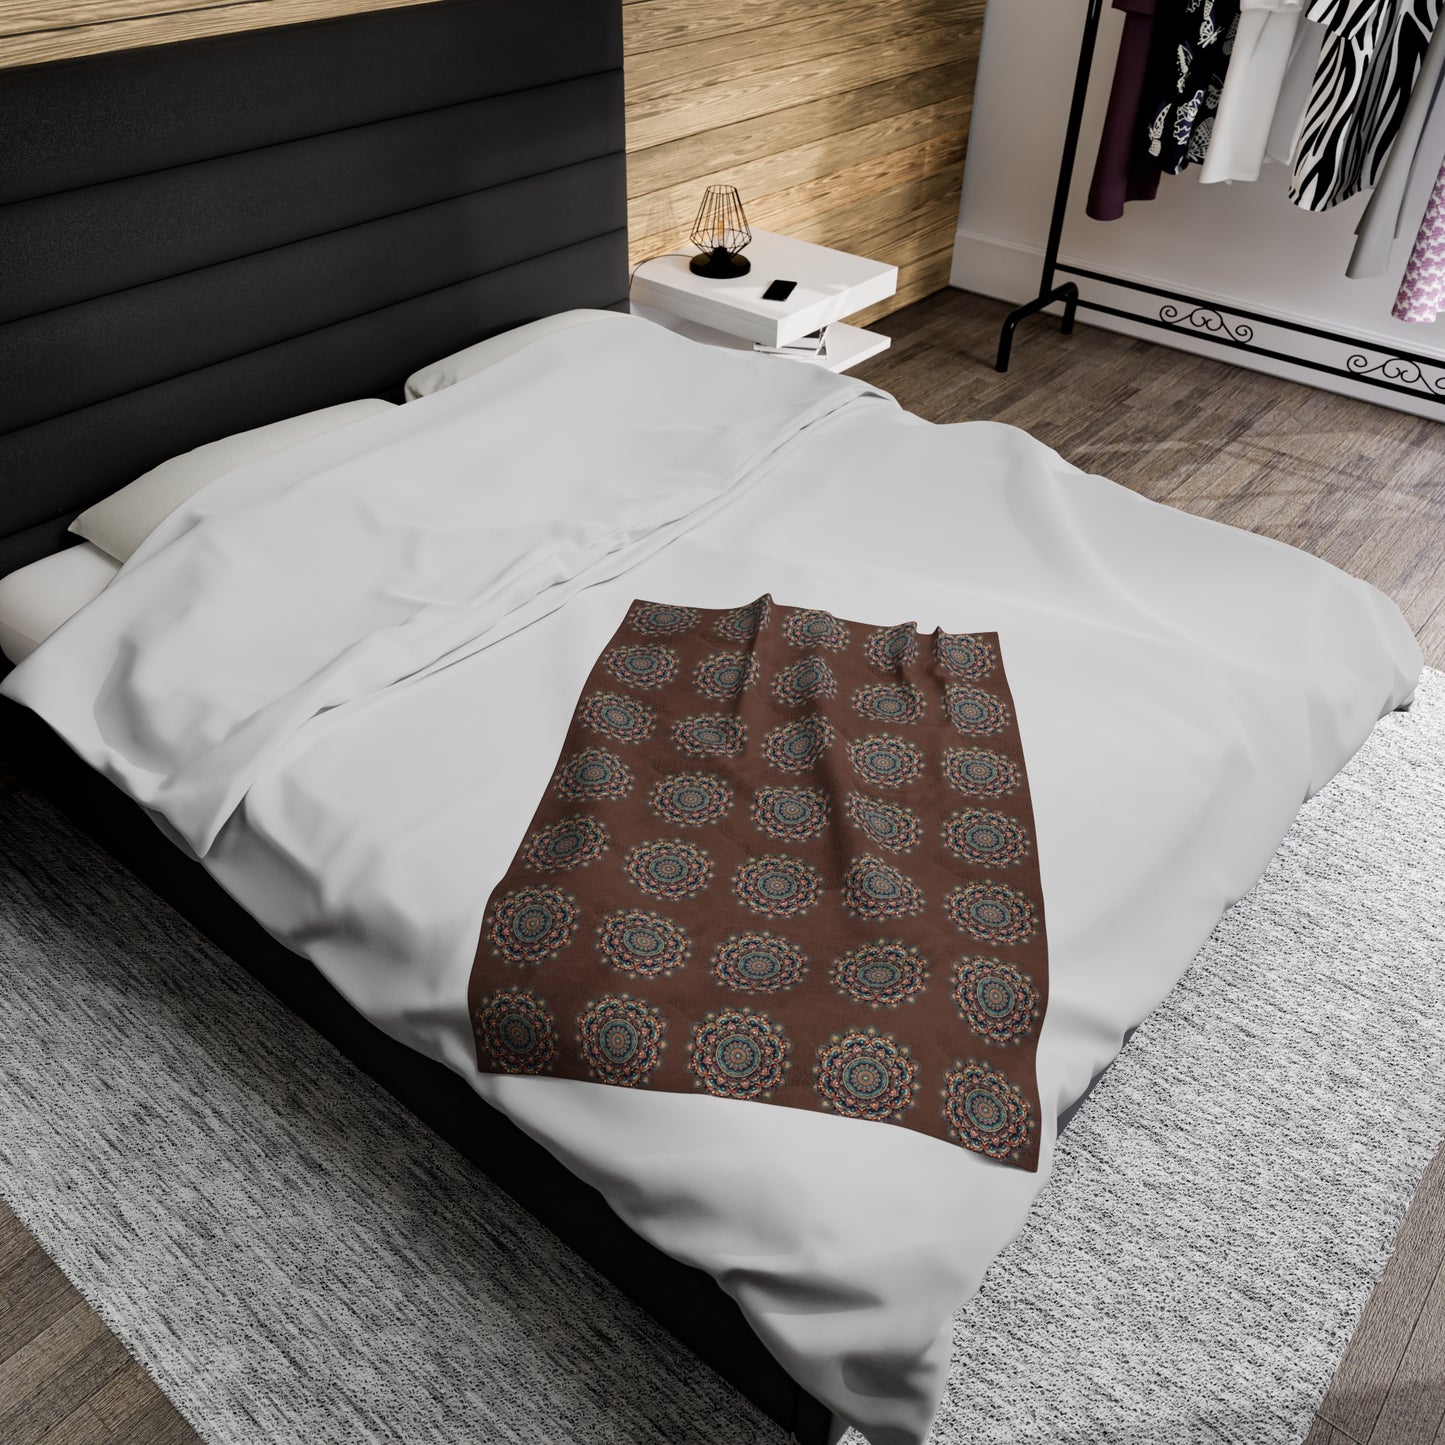 Mandala Magic: Intricate Pattern Velveteen Plush Blanket